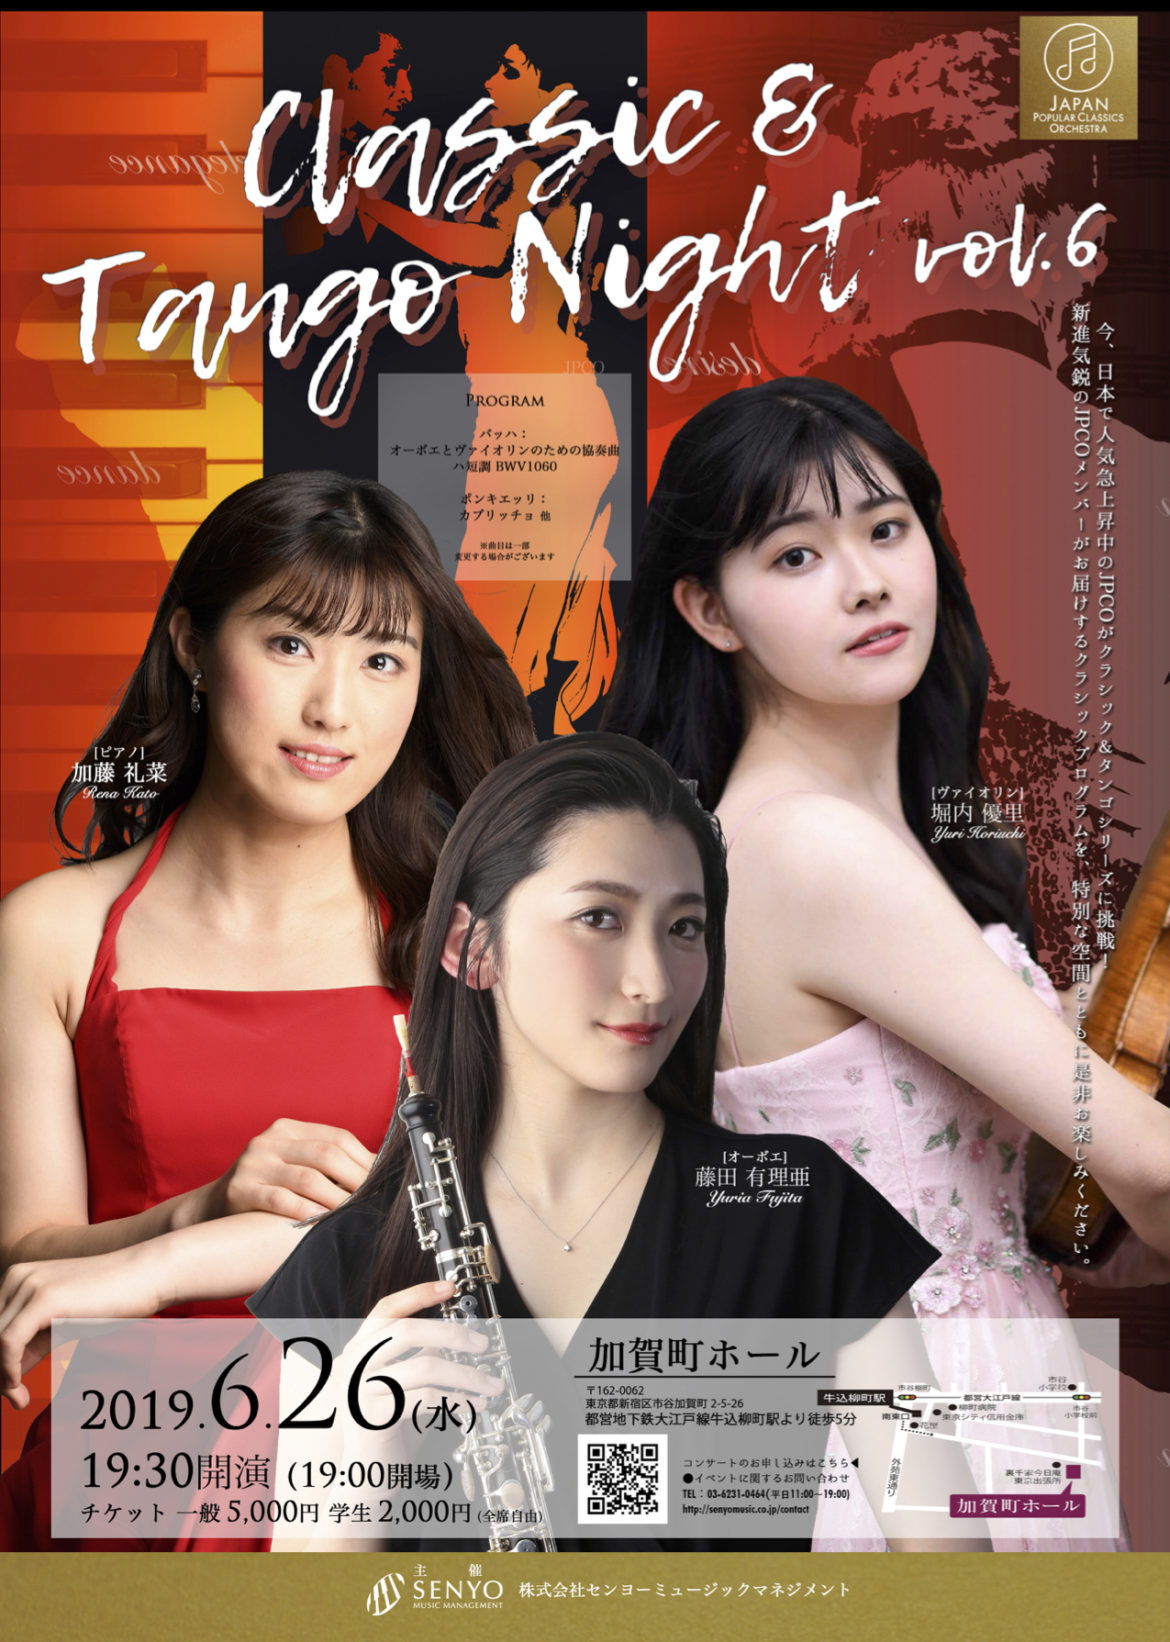 2019.6.26  JPCO CLASSIC & TANGO NIGHT  vol.6